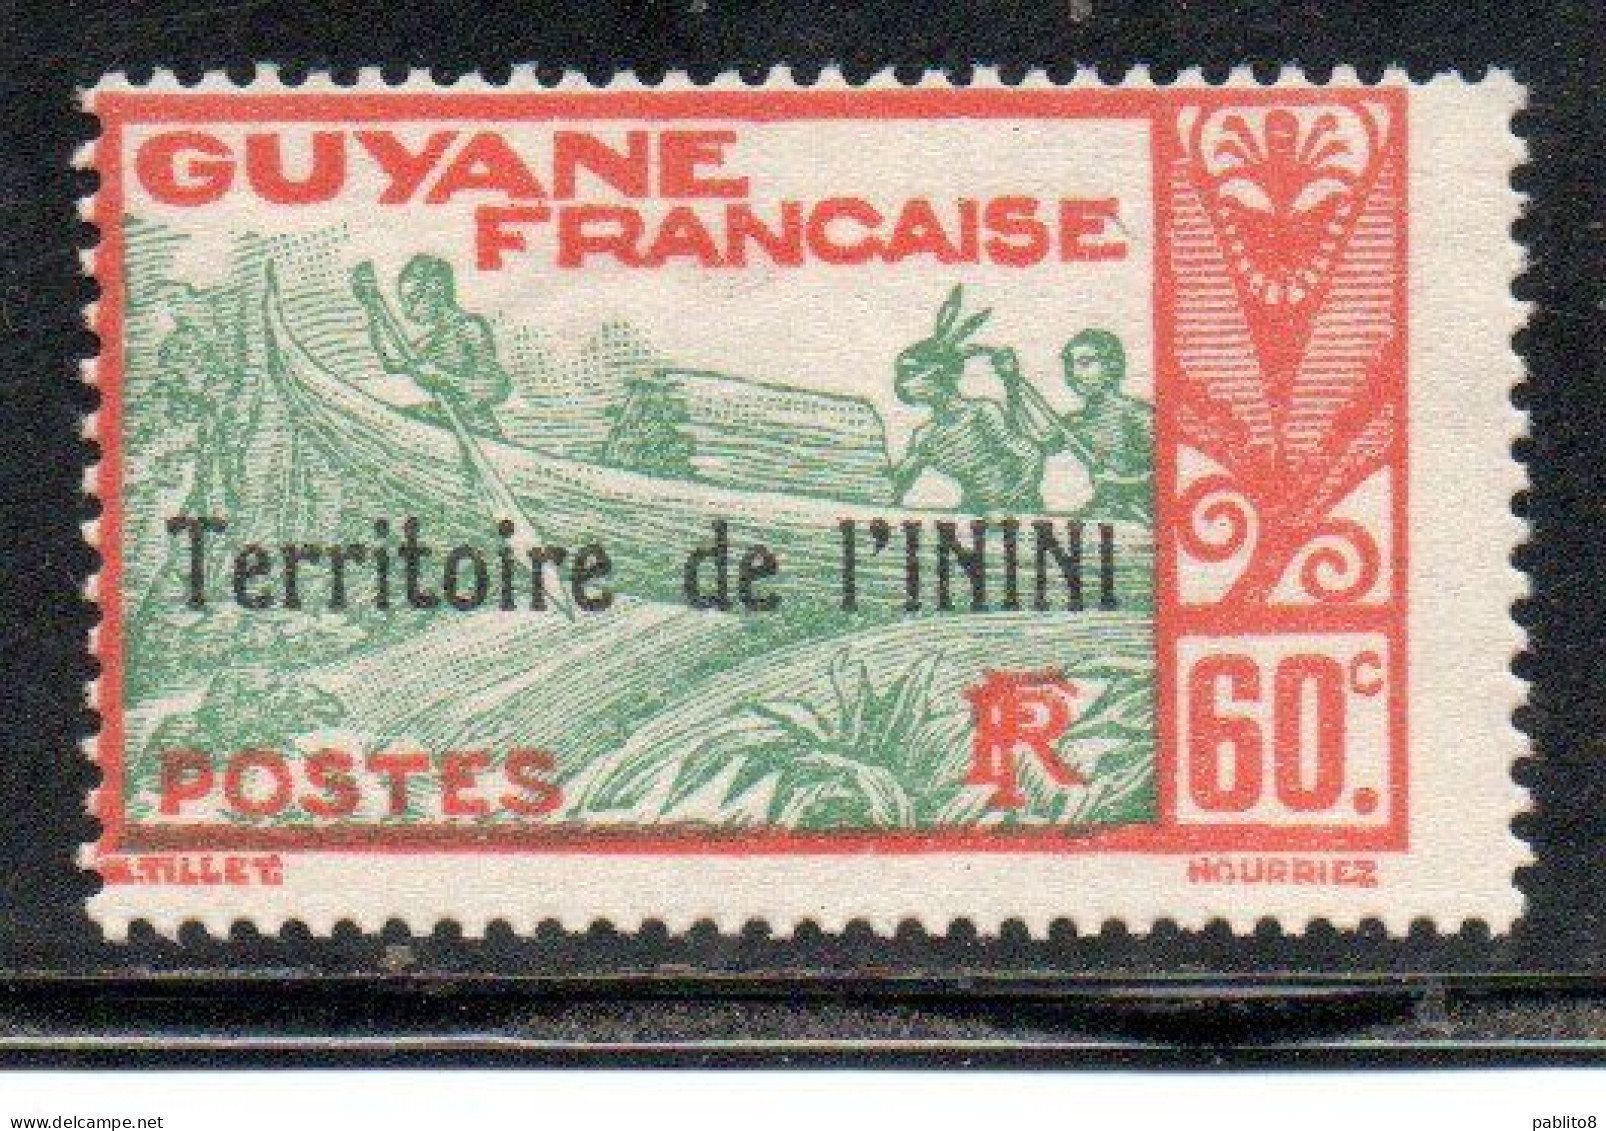 GUYANE FRANCAISE TERRITOIRE DE L'ININI OVERPRINTED SURCHARGE 1932 1940 SHOOTING RAPIDS MARONI RIVER 60c MNH - Nuevos